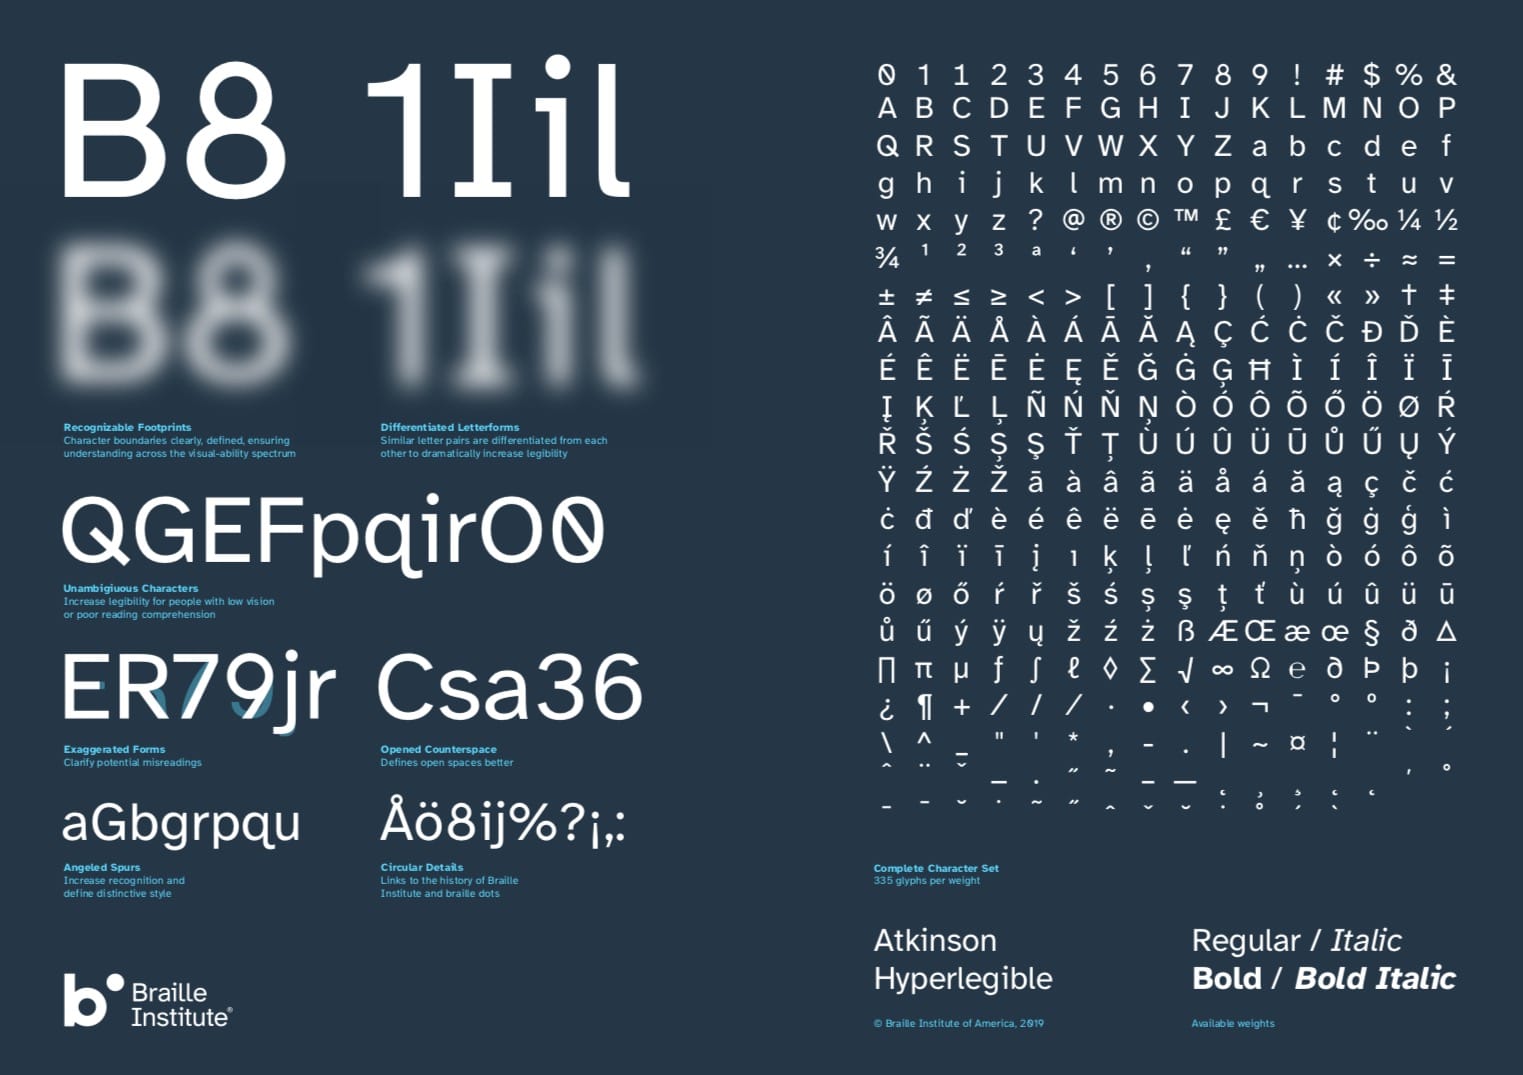 Type Hero 11 Braille Institute Atkinson Hyperlegible Typeface Free Font Download Laptrinhx News